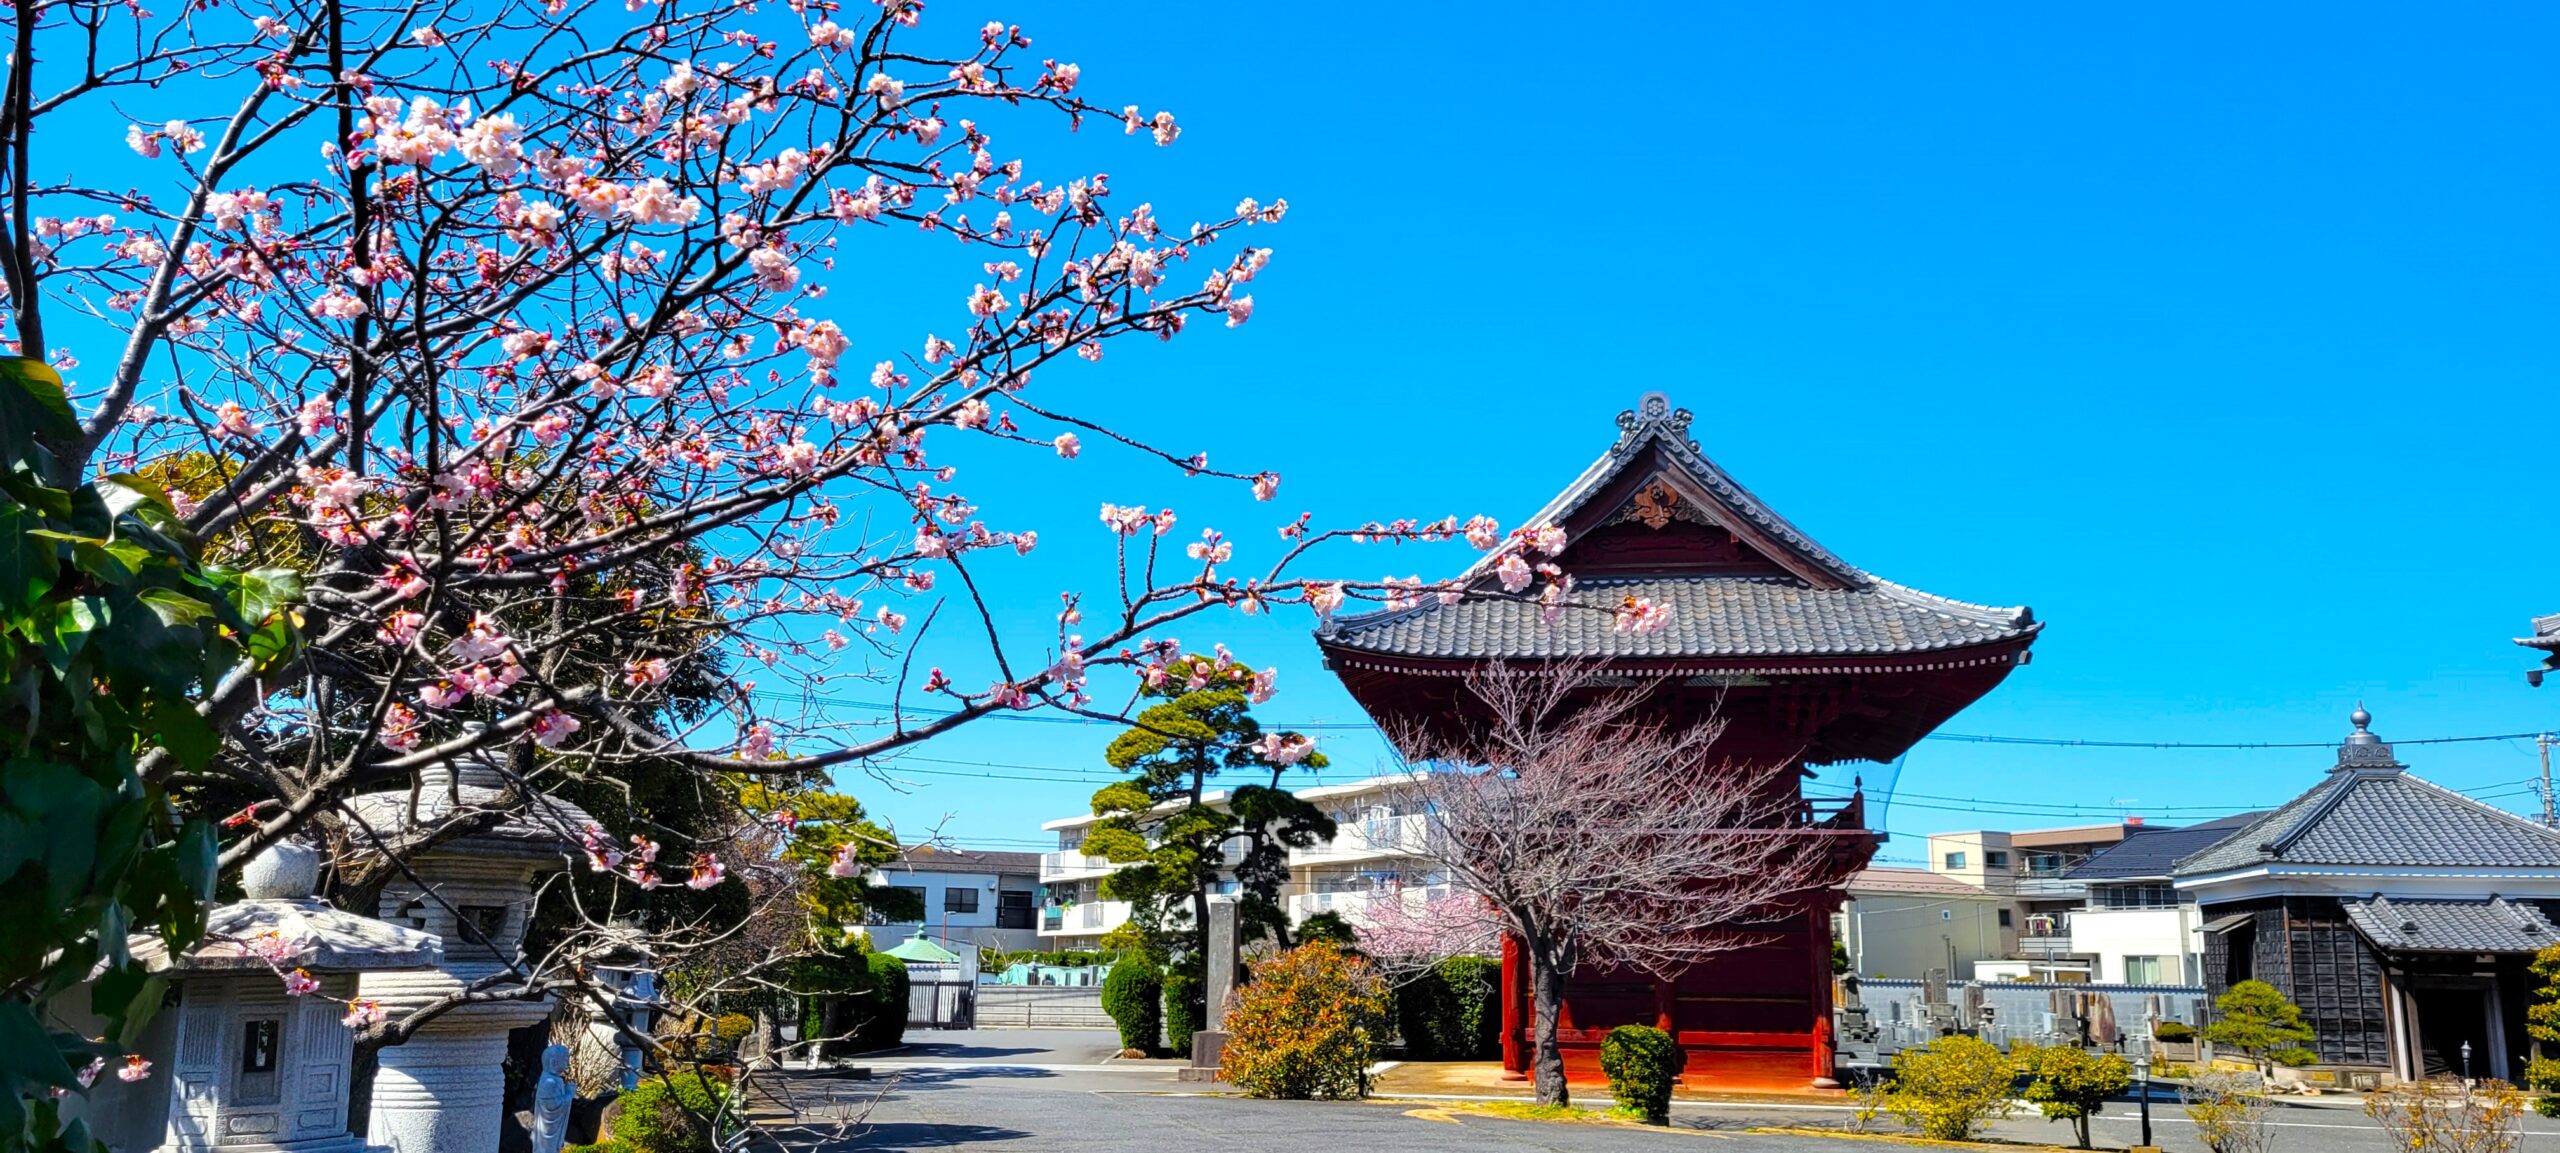 Tokuganji Temple